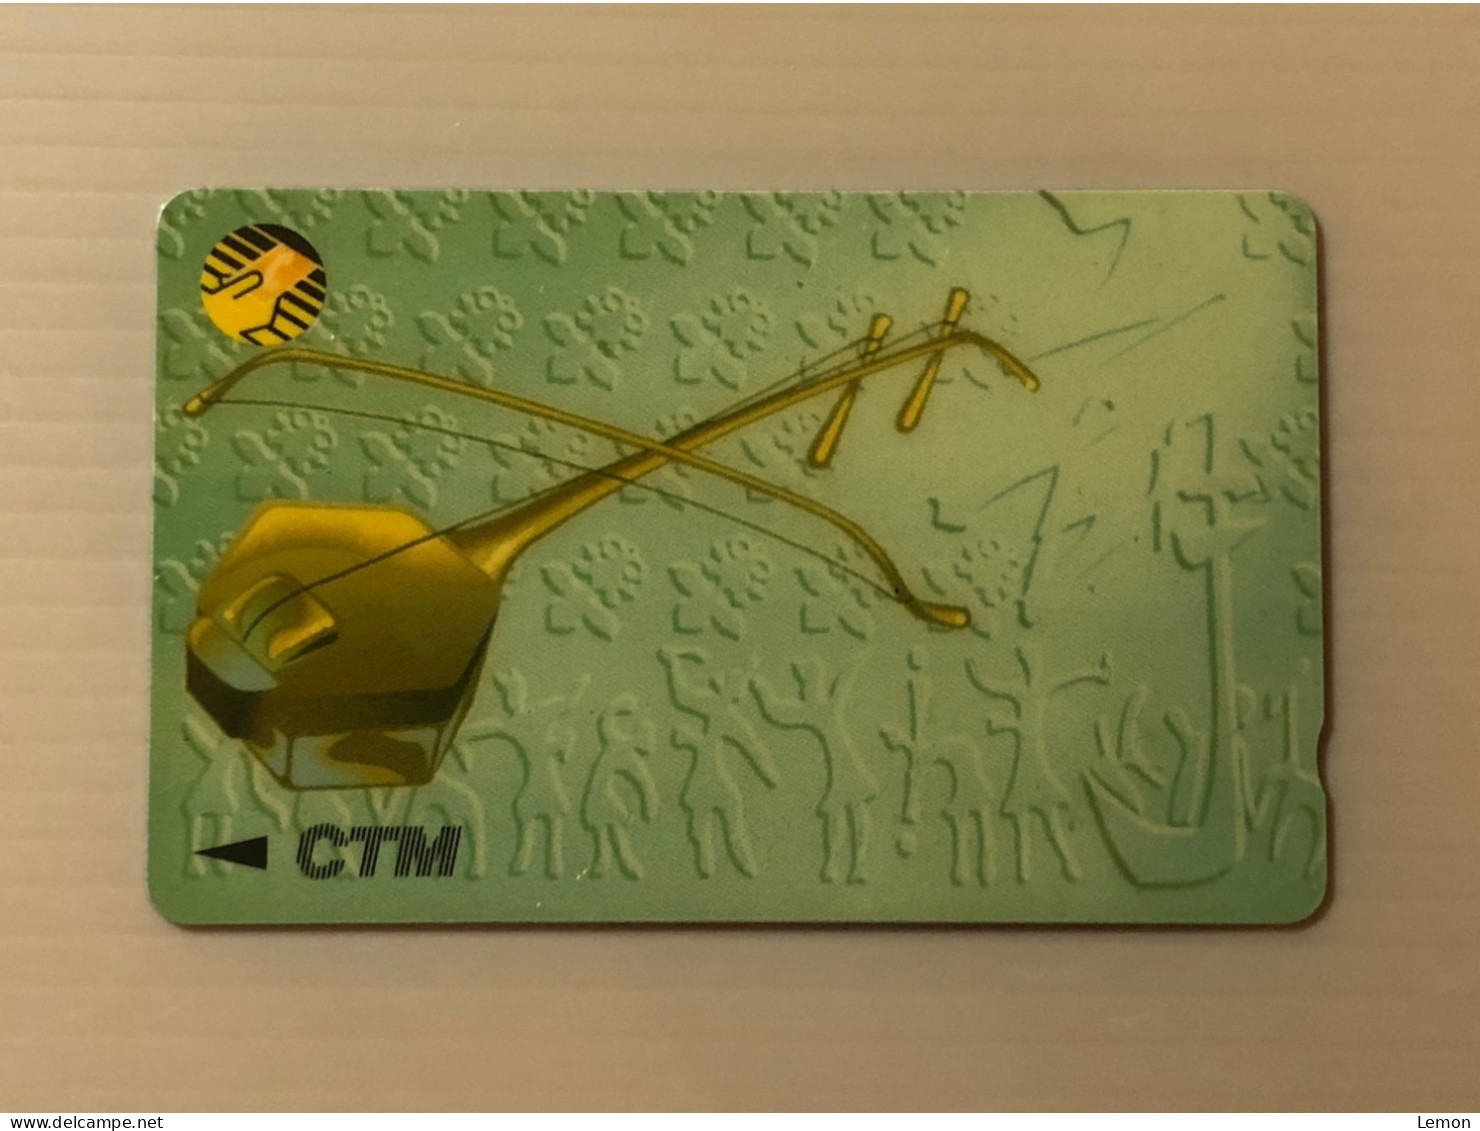 Macau Telecom CTM Gpt Phonecard, Chinese Musical Instrument, Set Of 1 Used Card - Macau